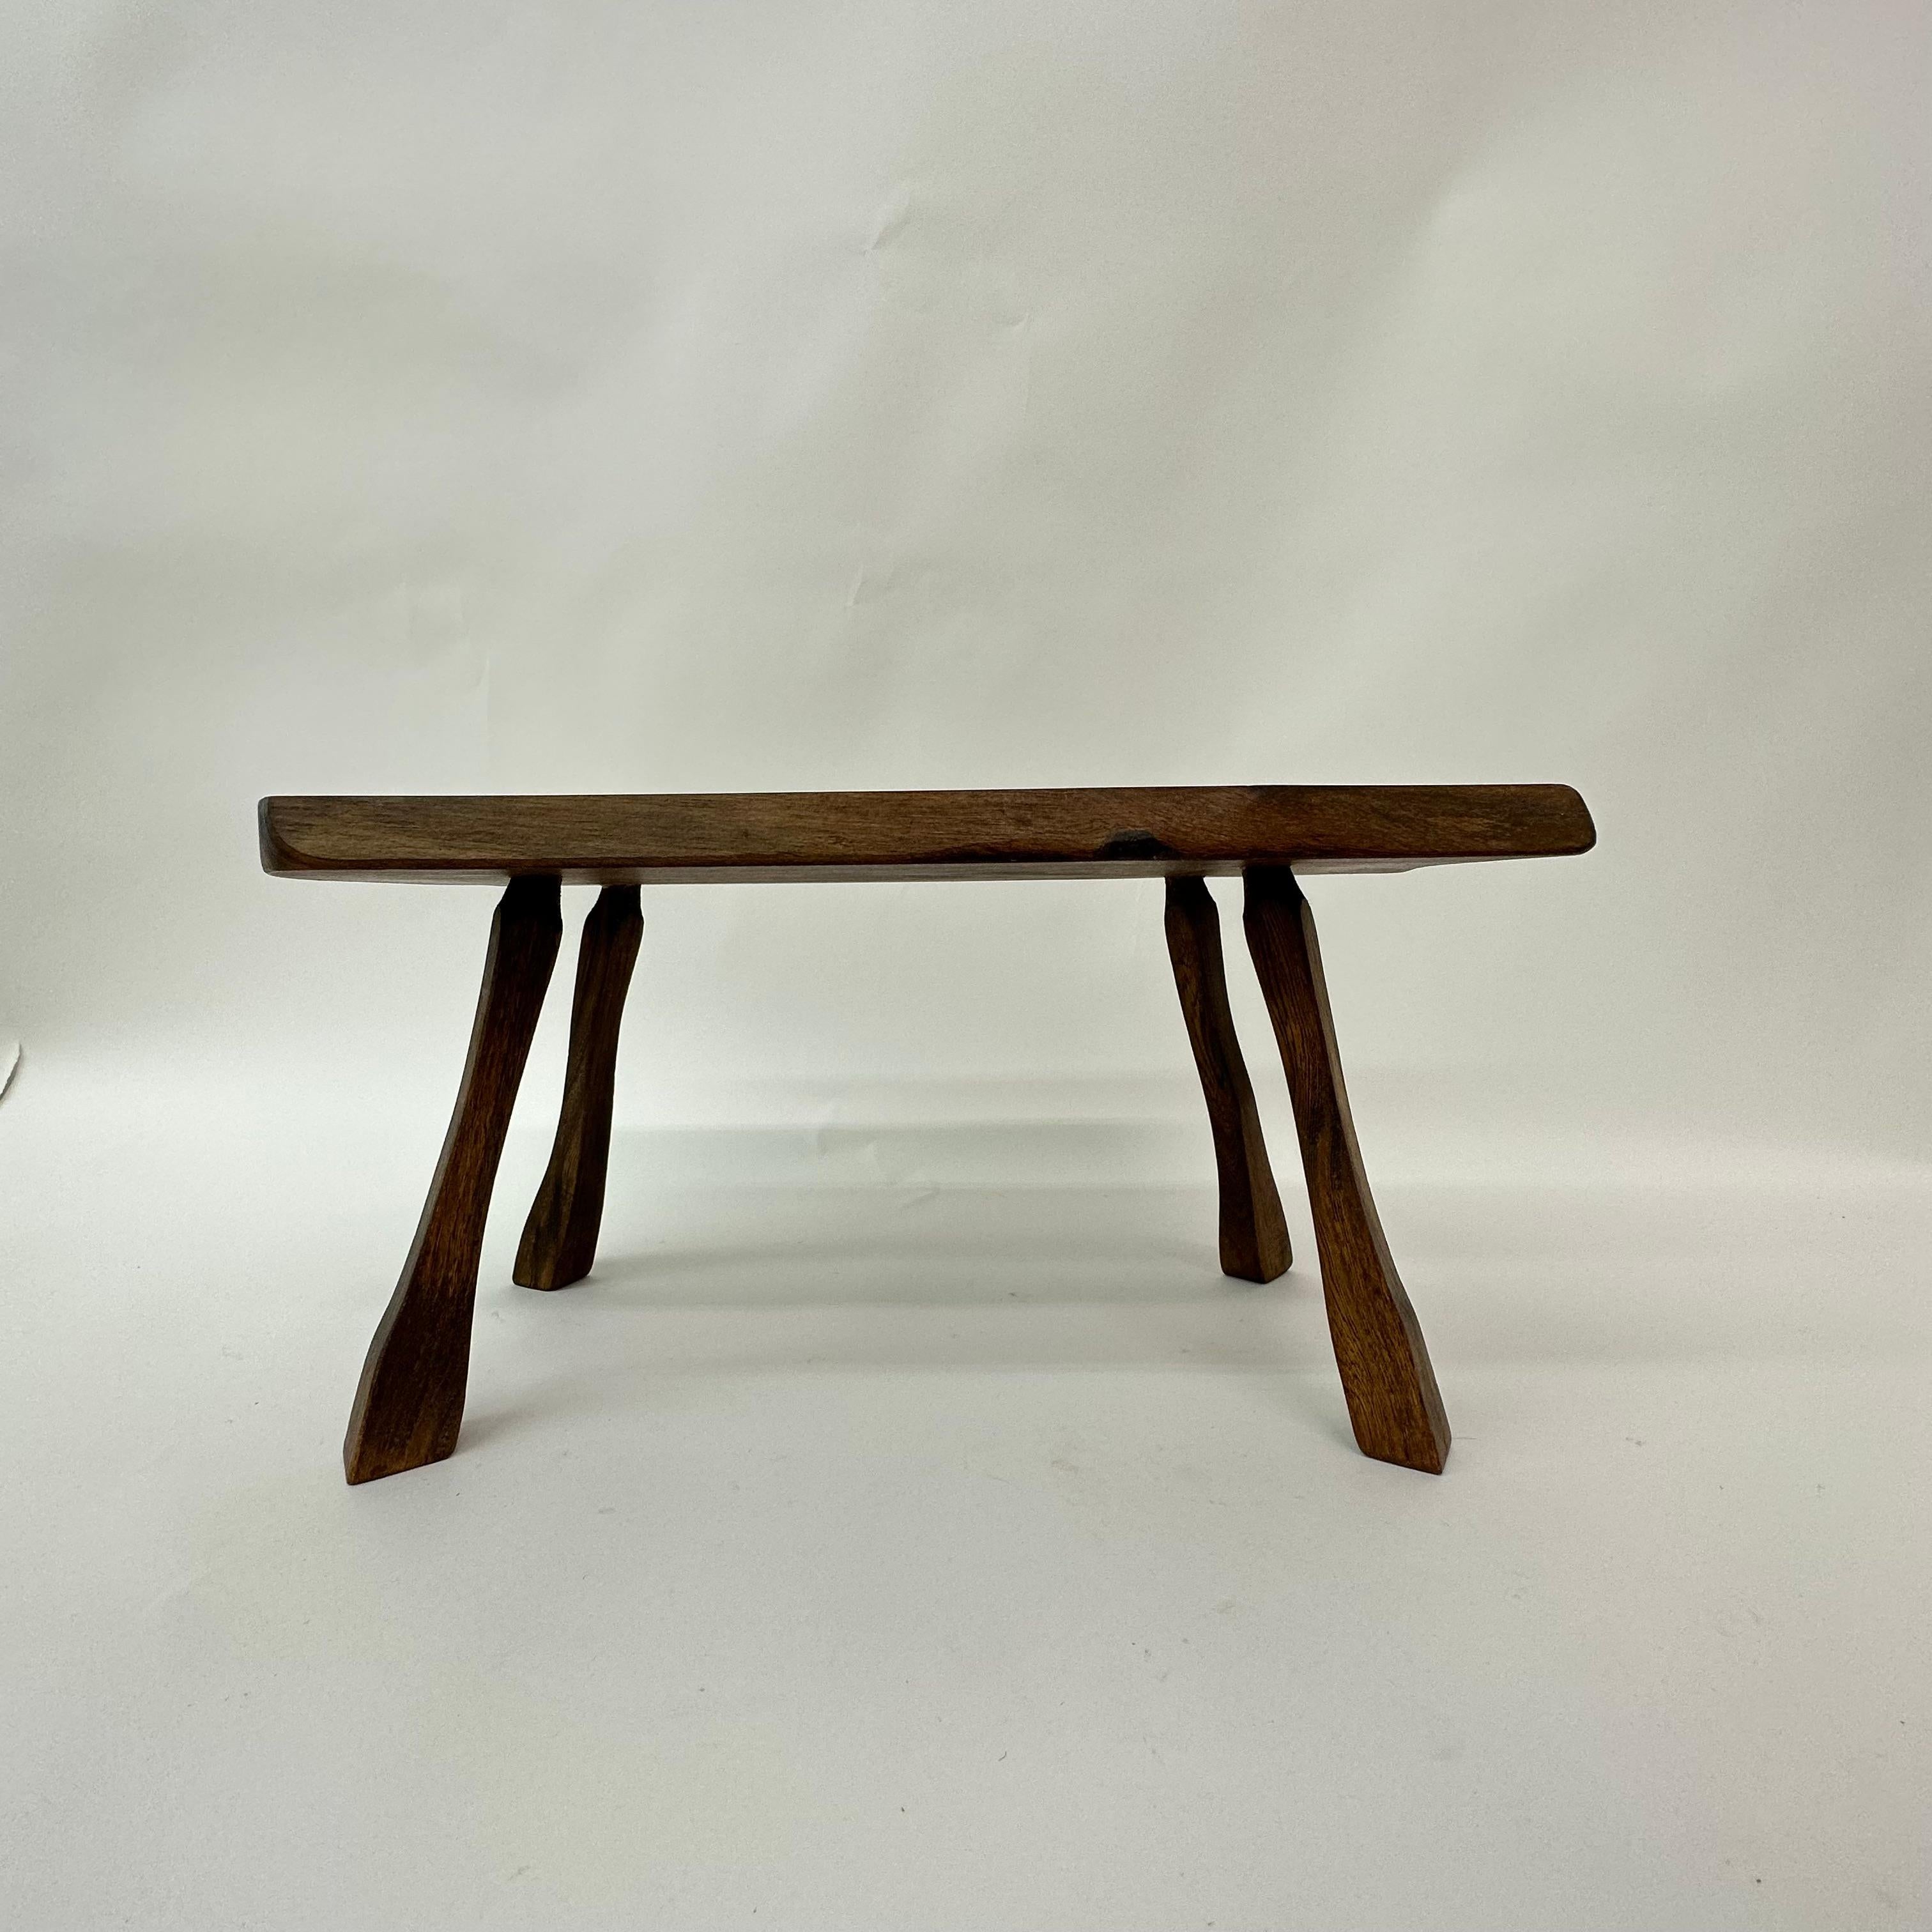 Dimensions: 50cm W, 24 cm H, 25cm D

Period: 1970s

Material: Wood

Color: brown.